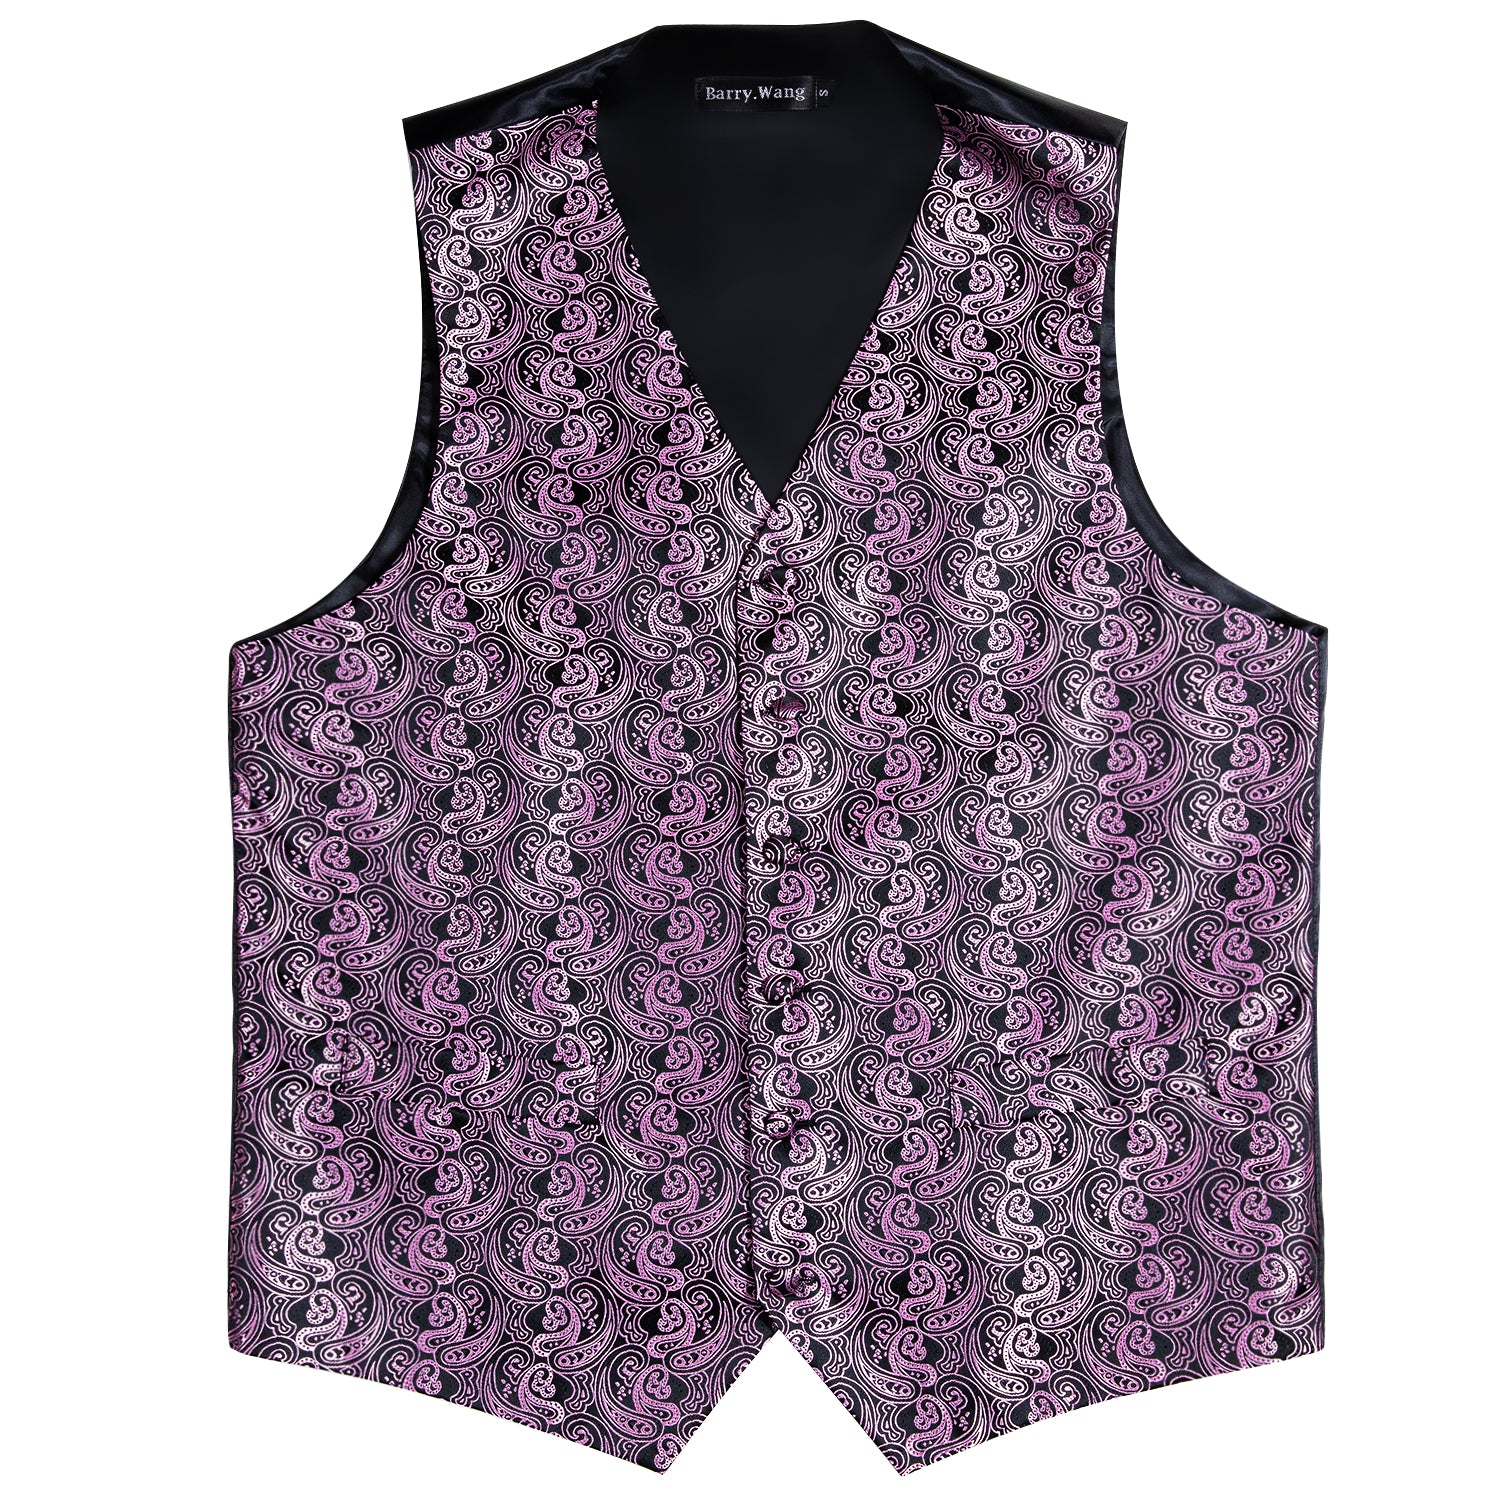 Classy Men's Pink Black Paisley Silk Vest Necktie Pocket square Cufflinks